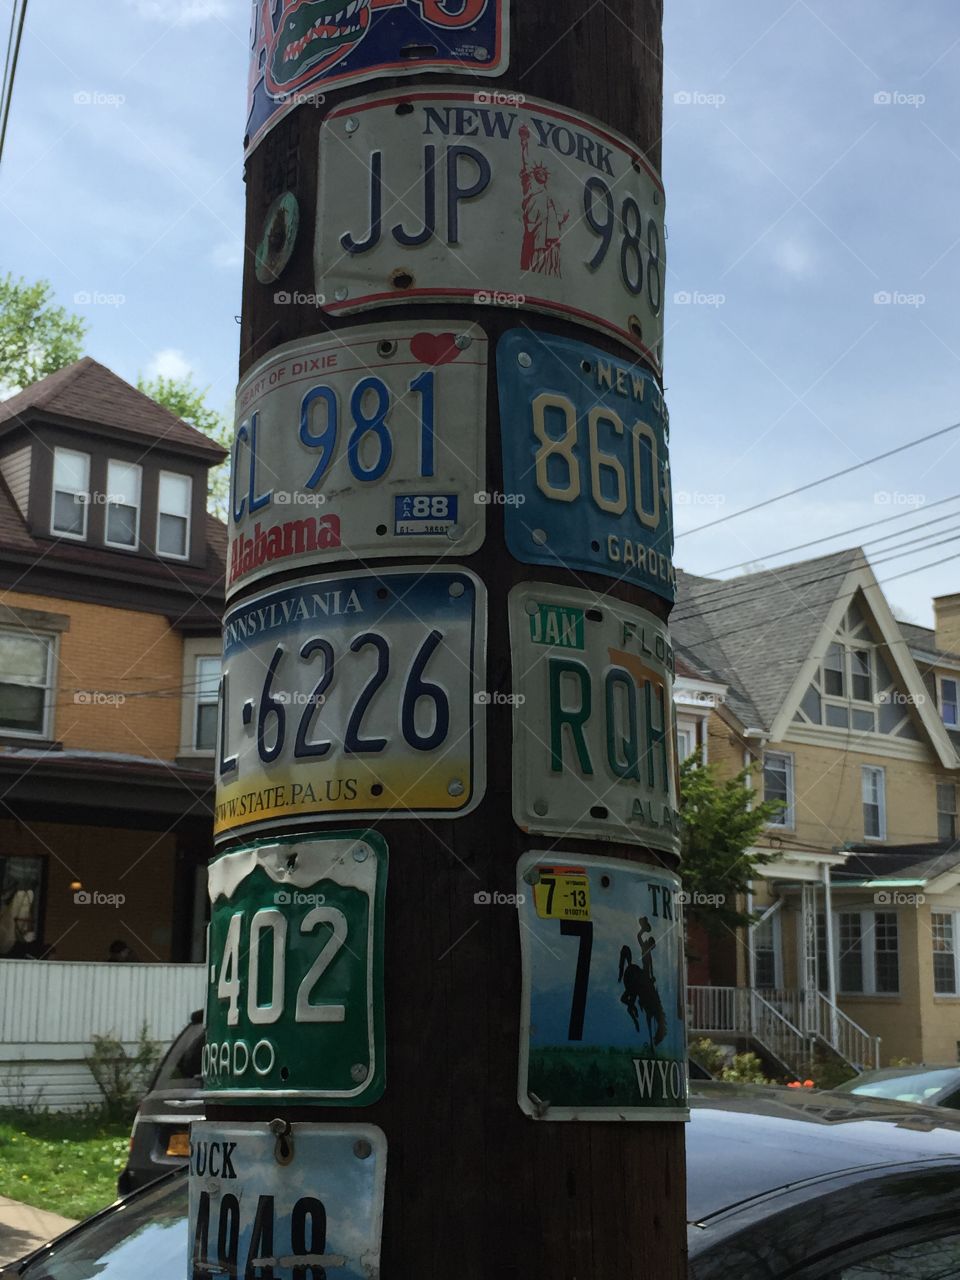 License plates on a telephone pole